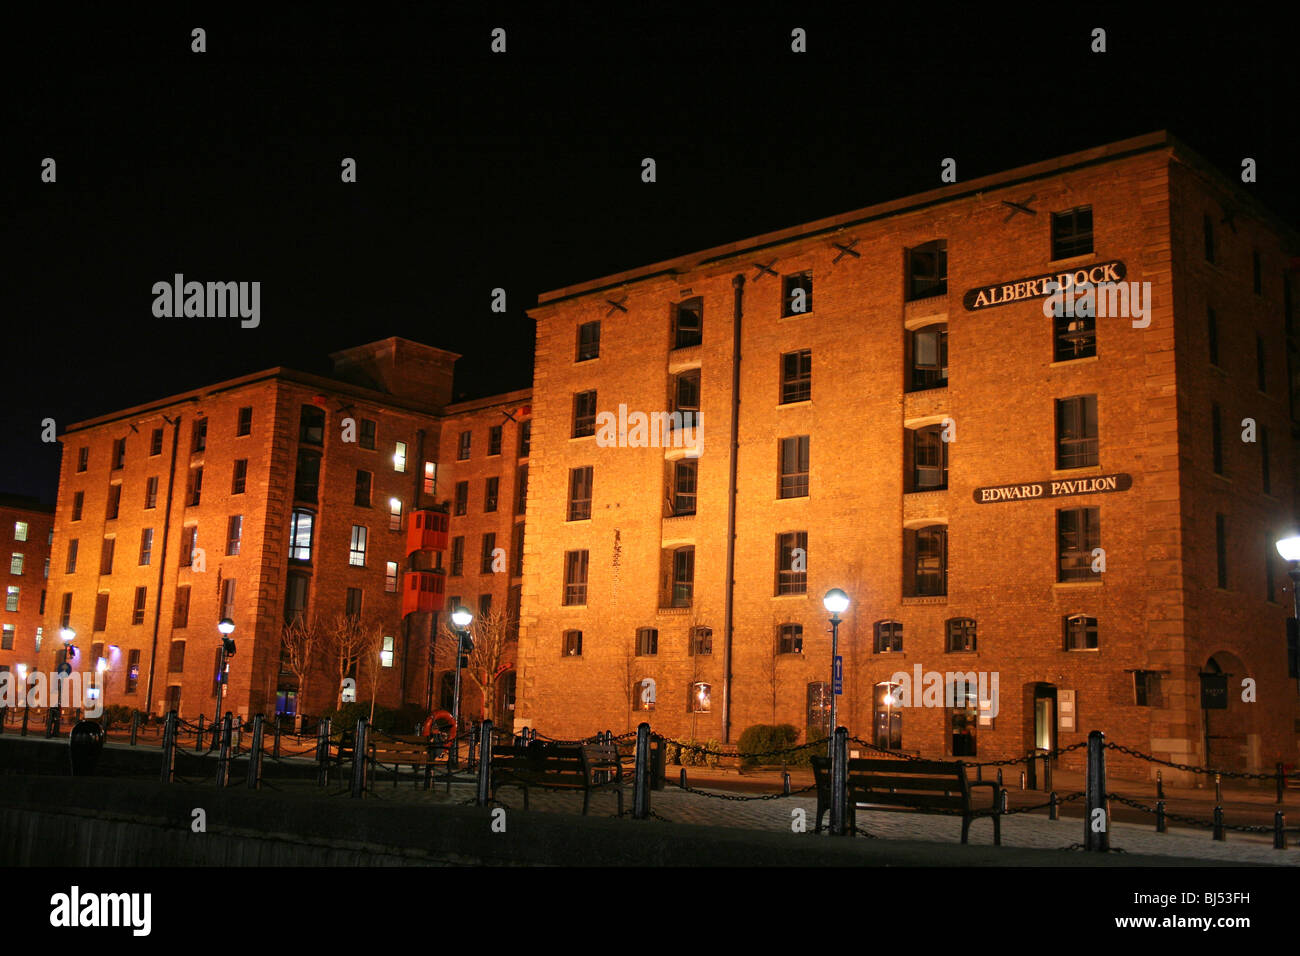 Albert Dock Warehouse Building At Night, Liverpool, UK Stock Photo